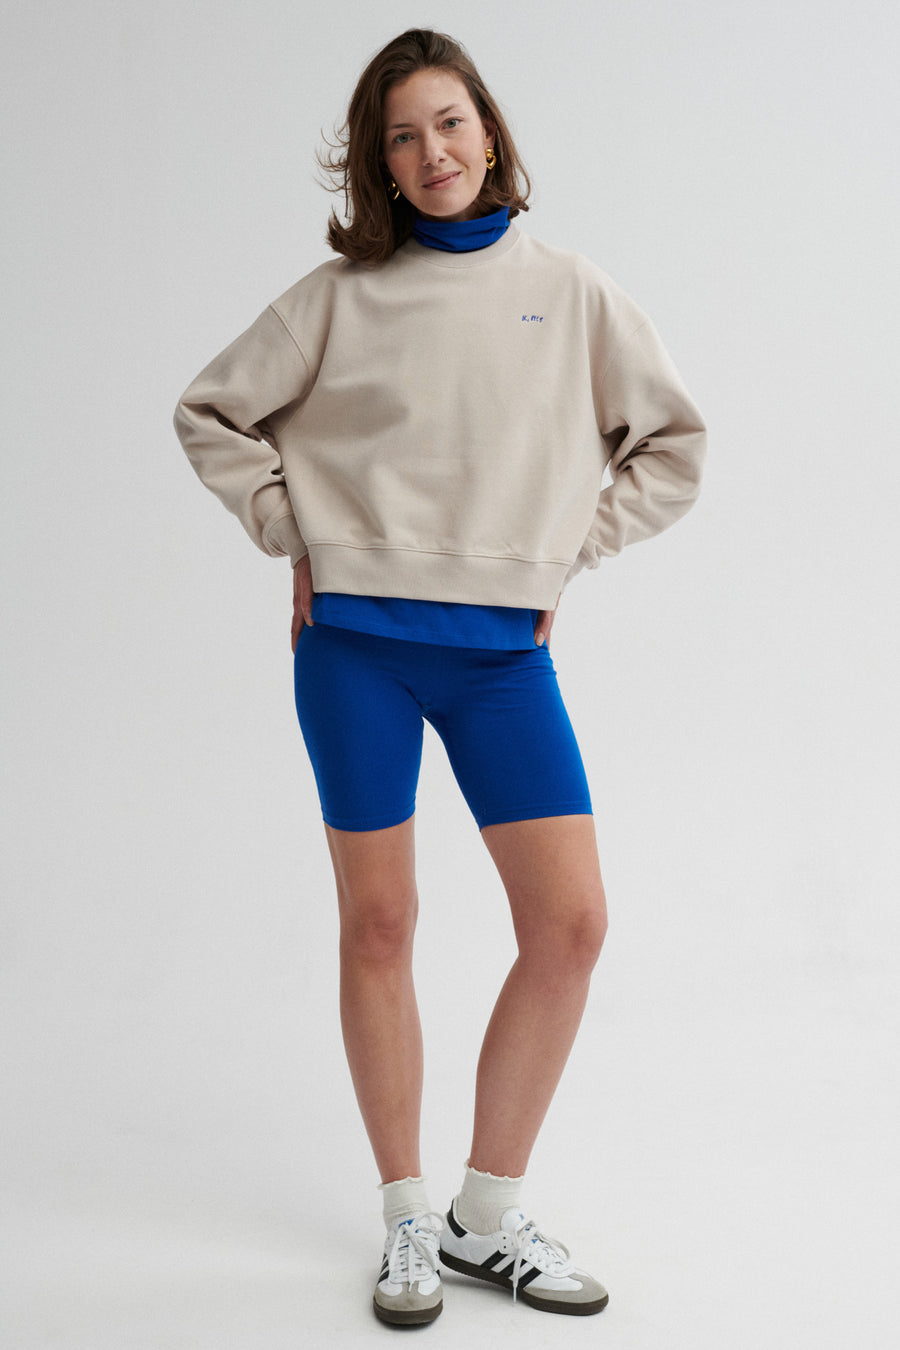 Biker shorts in fine cotton / 08 / 07 / ultramarine